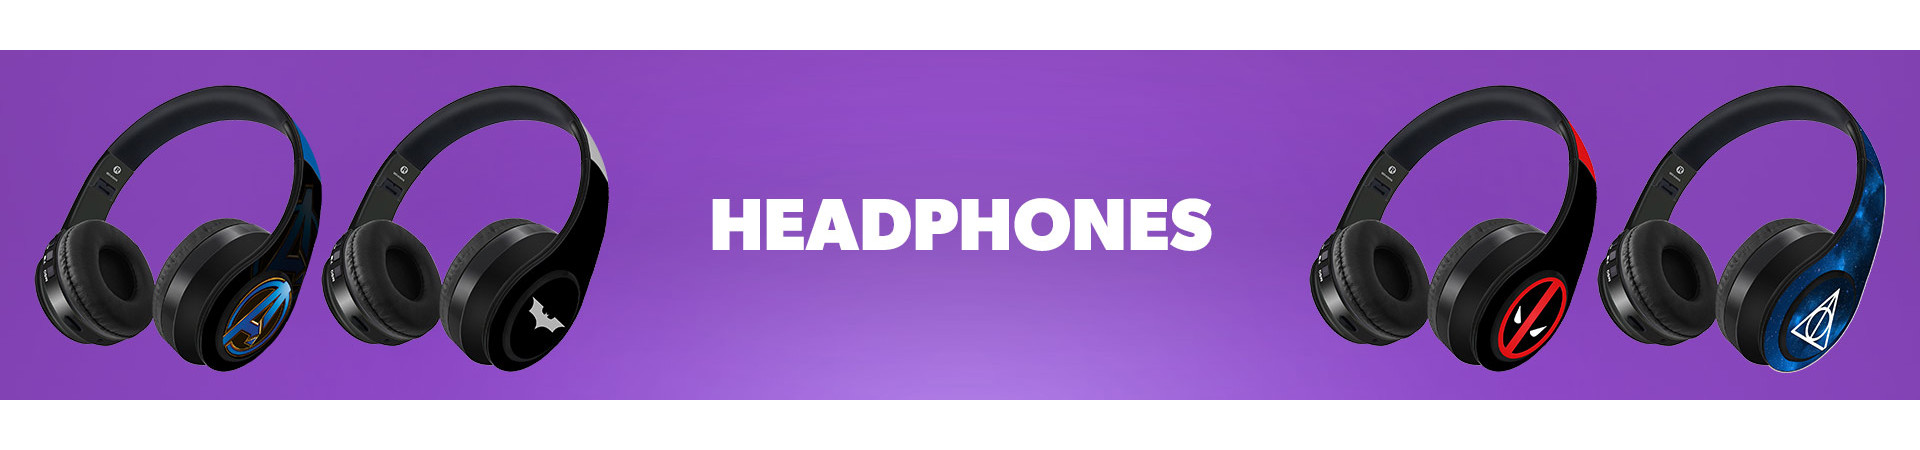 Headphones - Category Banner